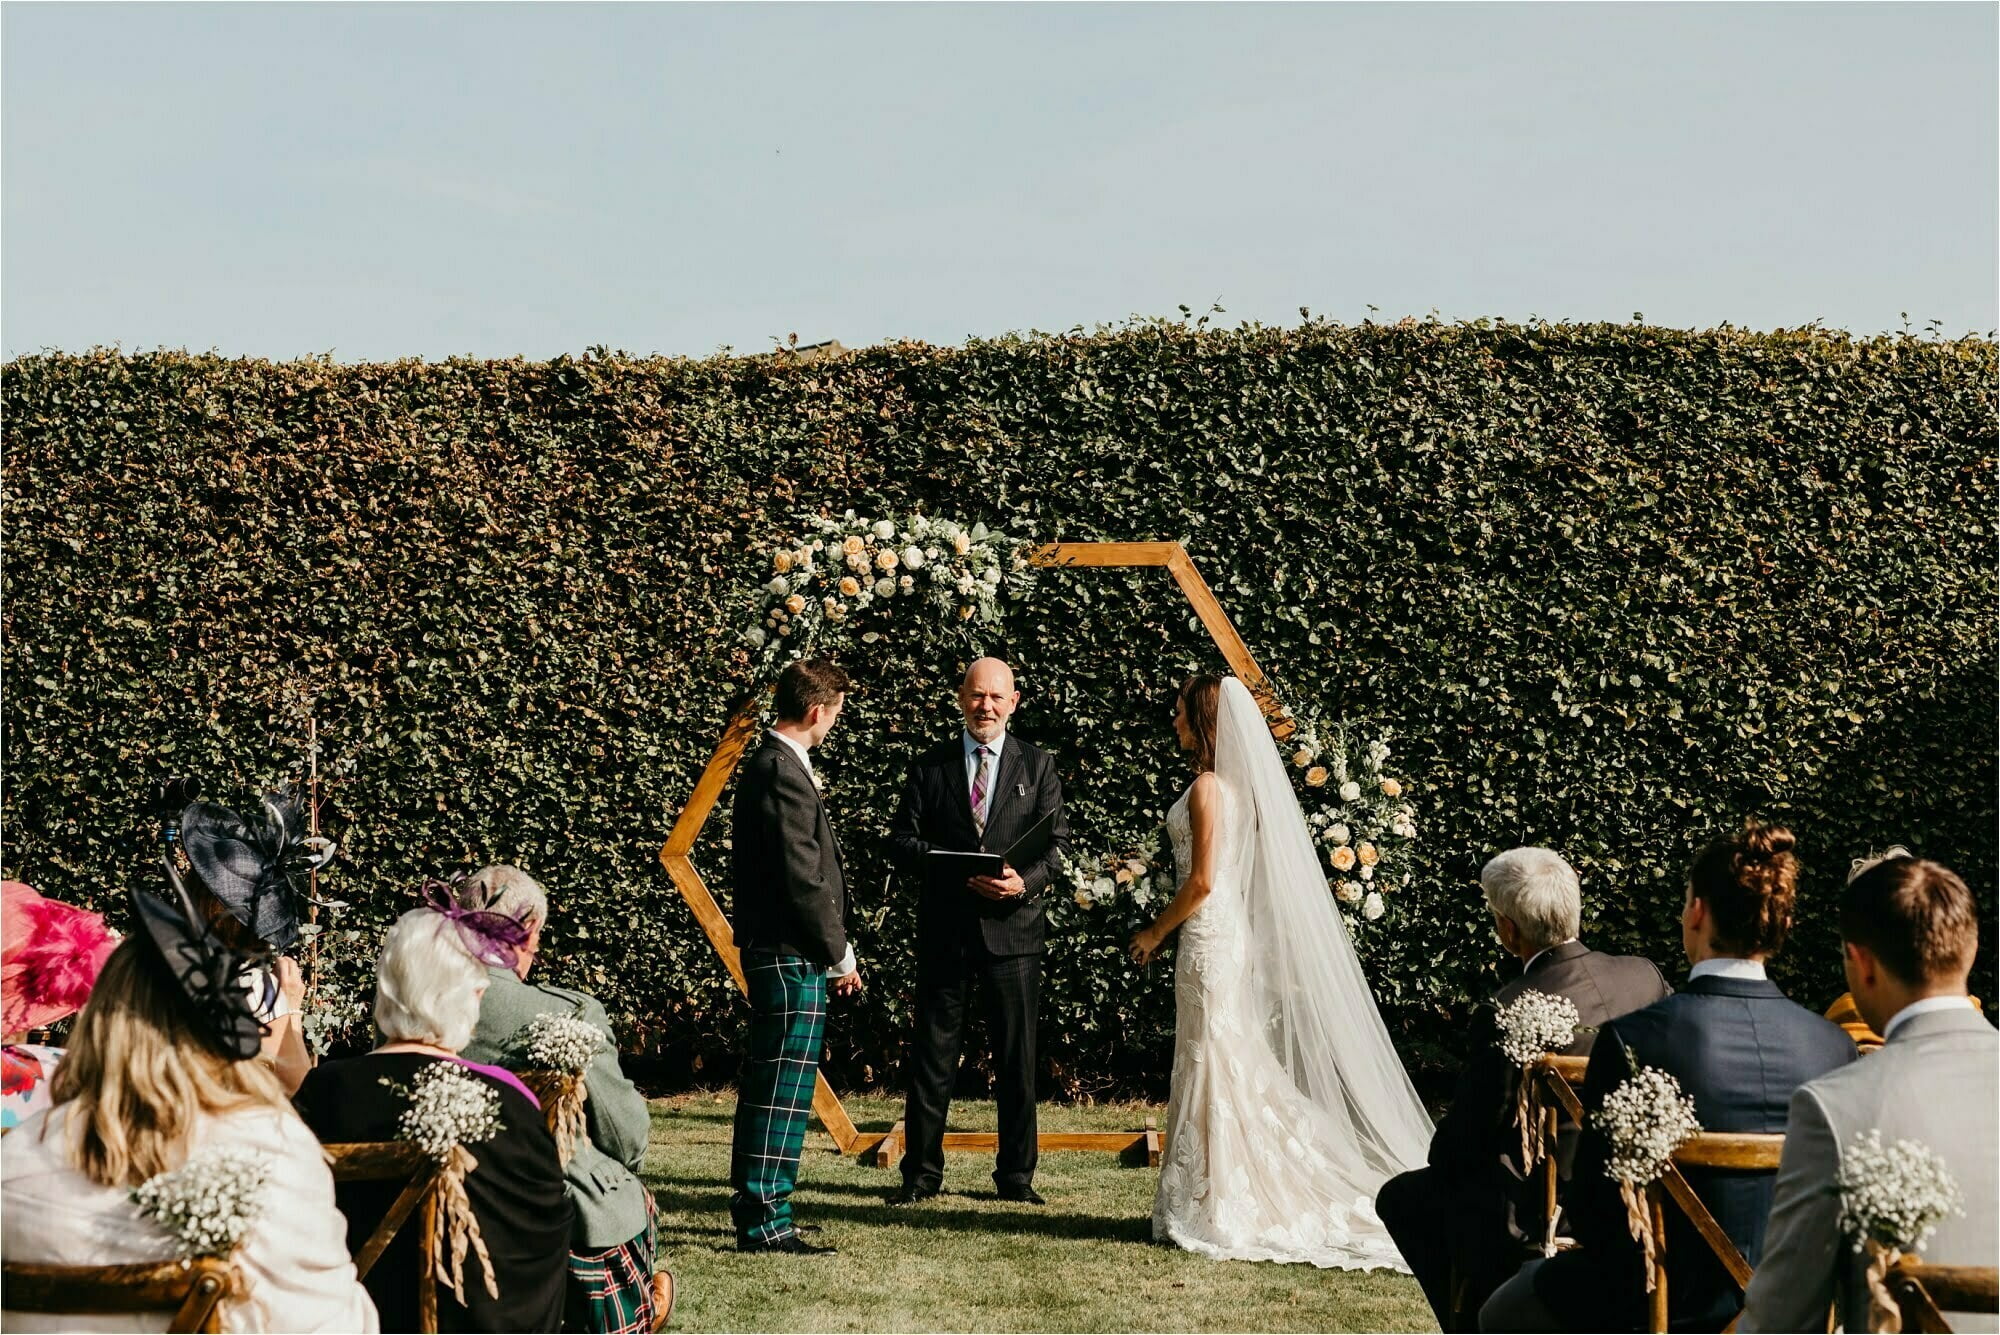 farm micro wedding scottish borders bride groom marriage ceremony with luxury event styling scotland hexagonal wooden backdrop